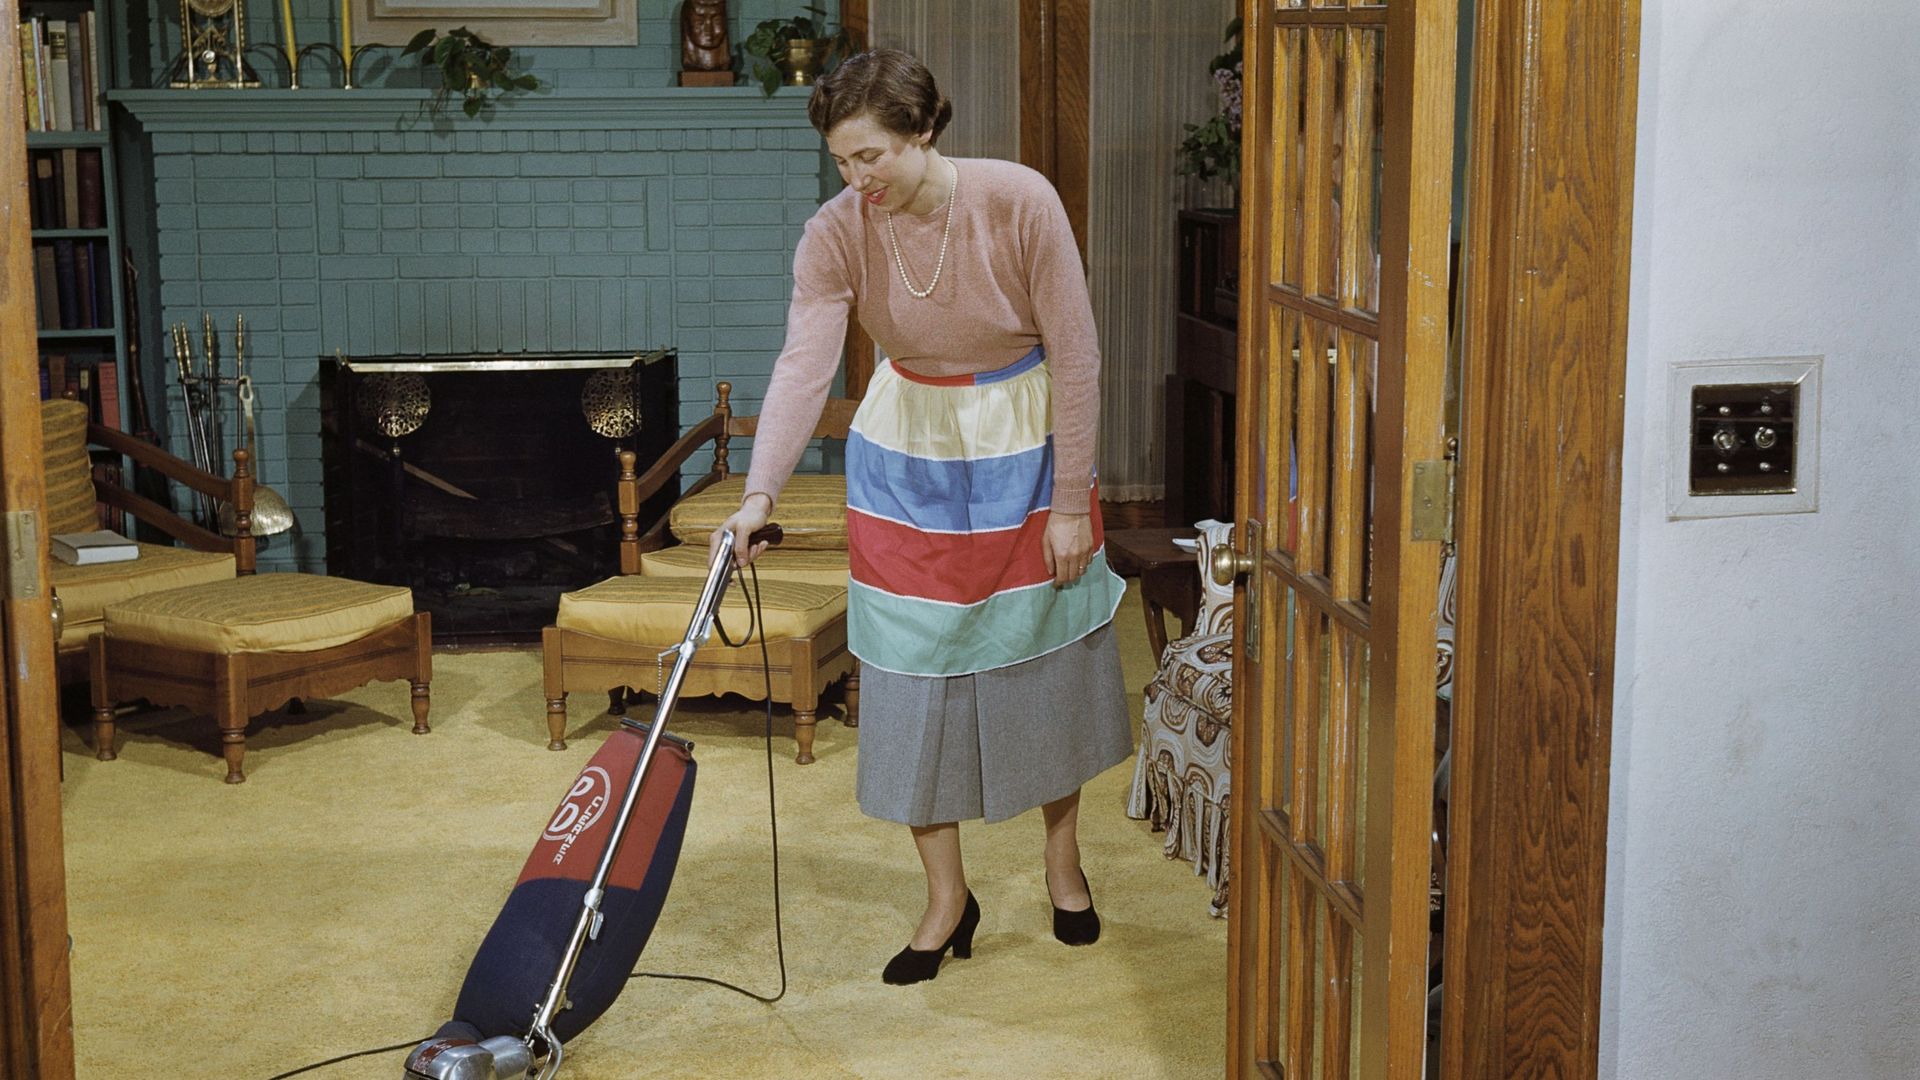 Woman Vacuuming Living Room